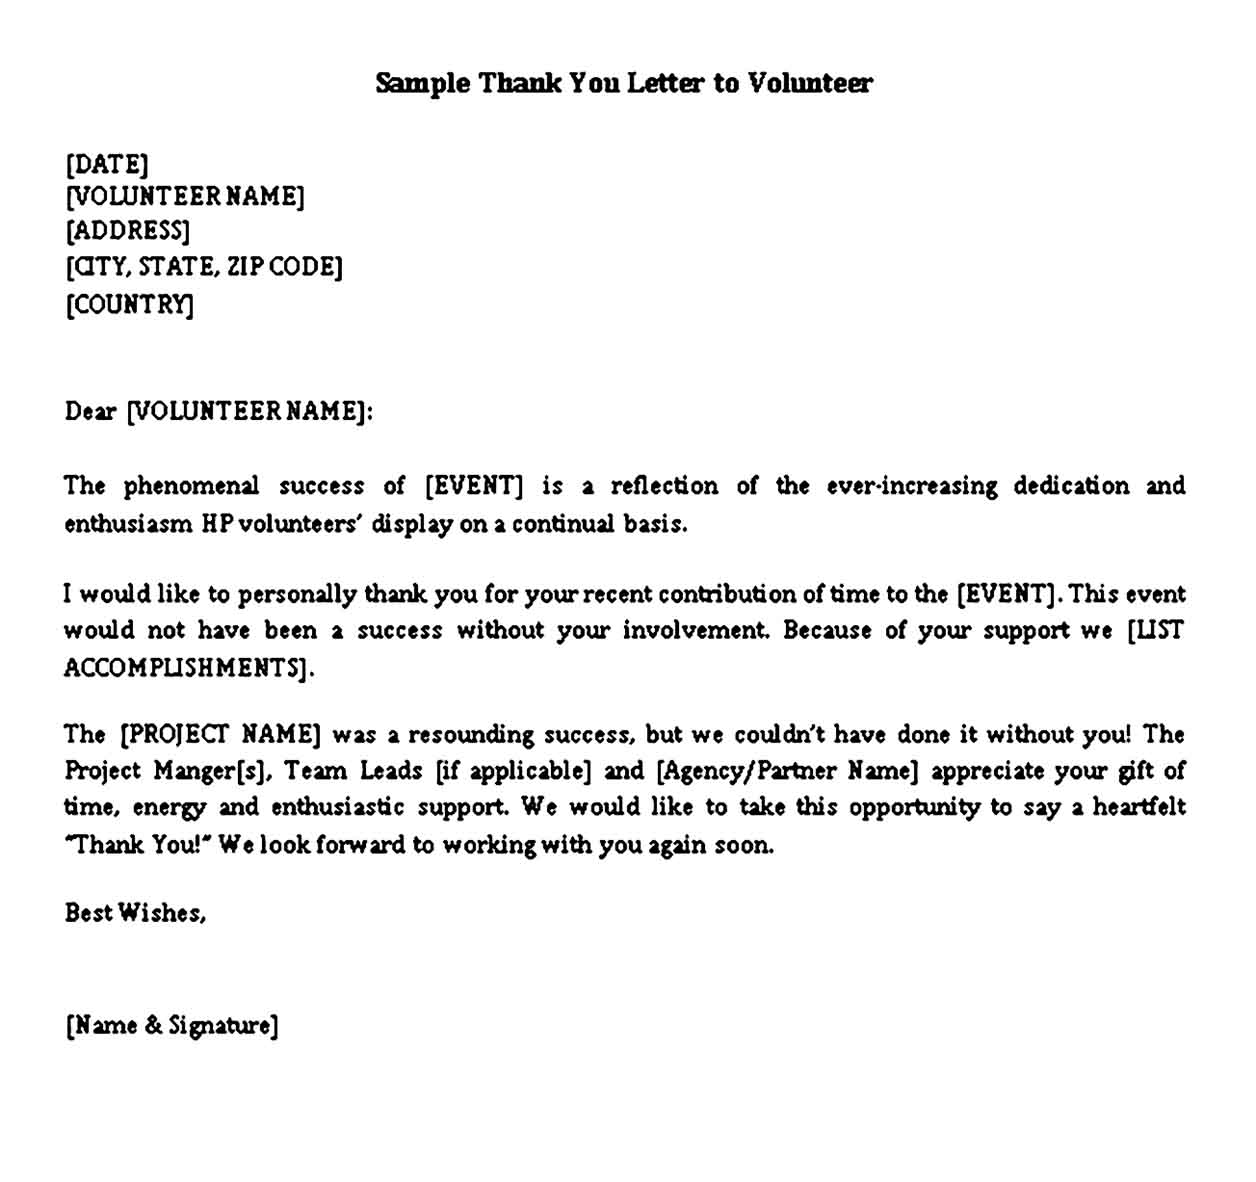 Sample Volunteer Thank You Letter